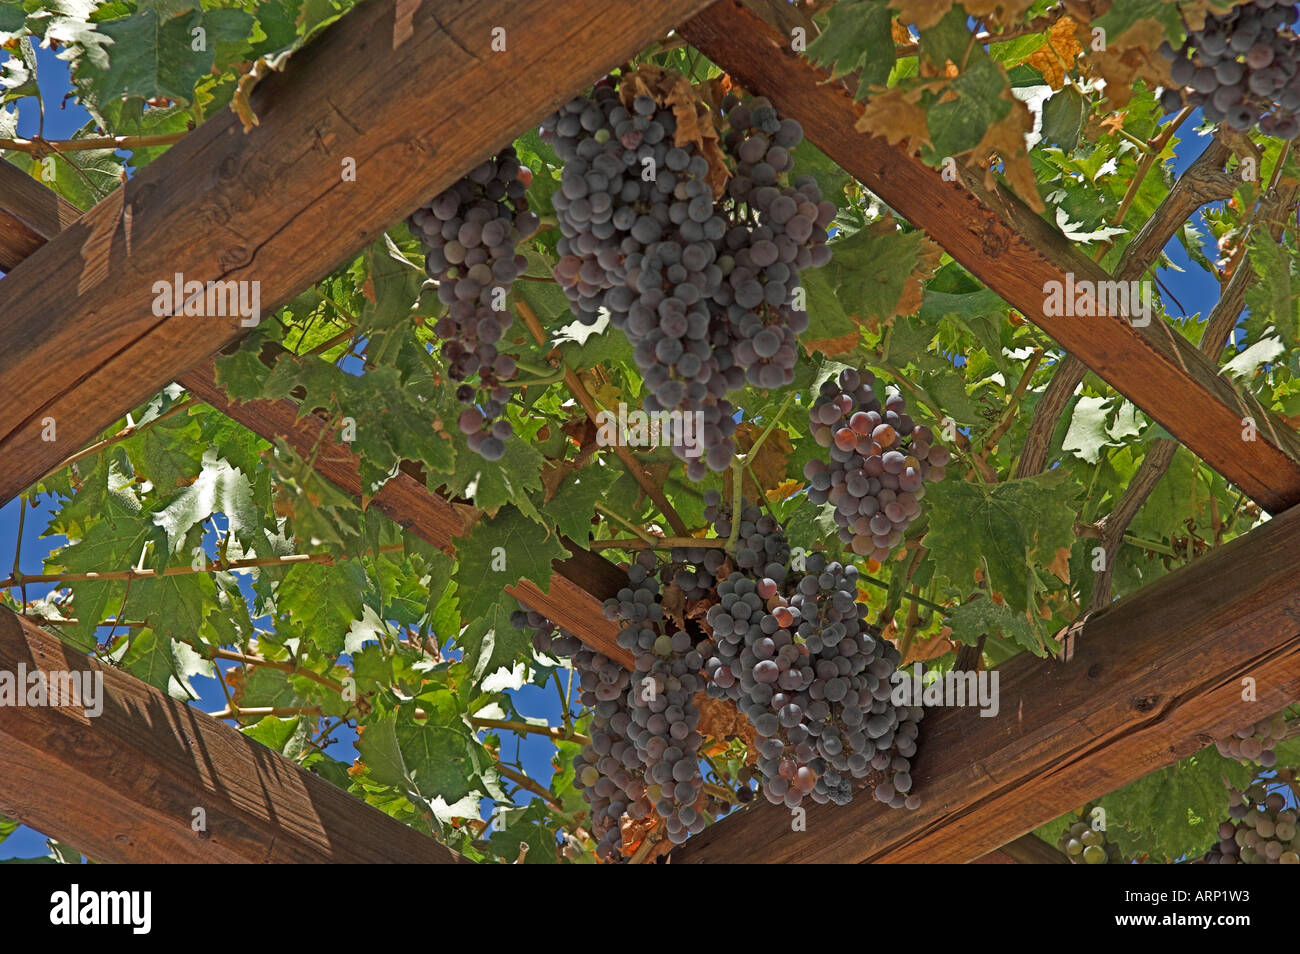 Mature grapes ready for harvest hanging on vine in verandah Paros Island Greece Stock Photo